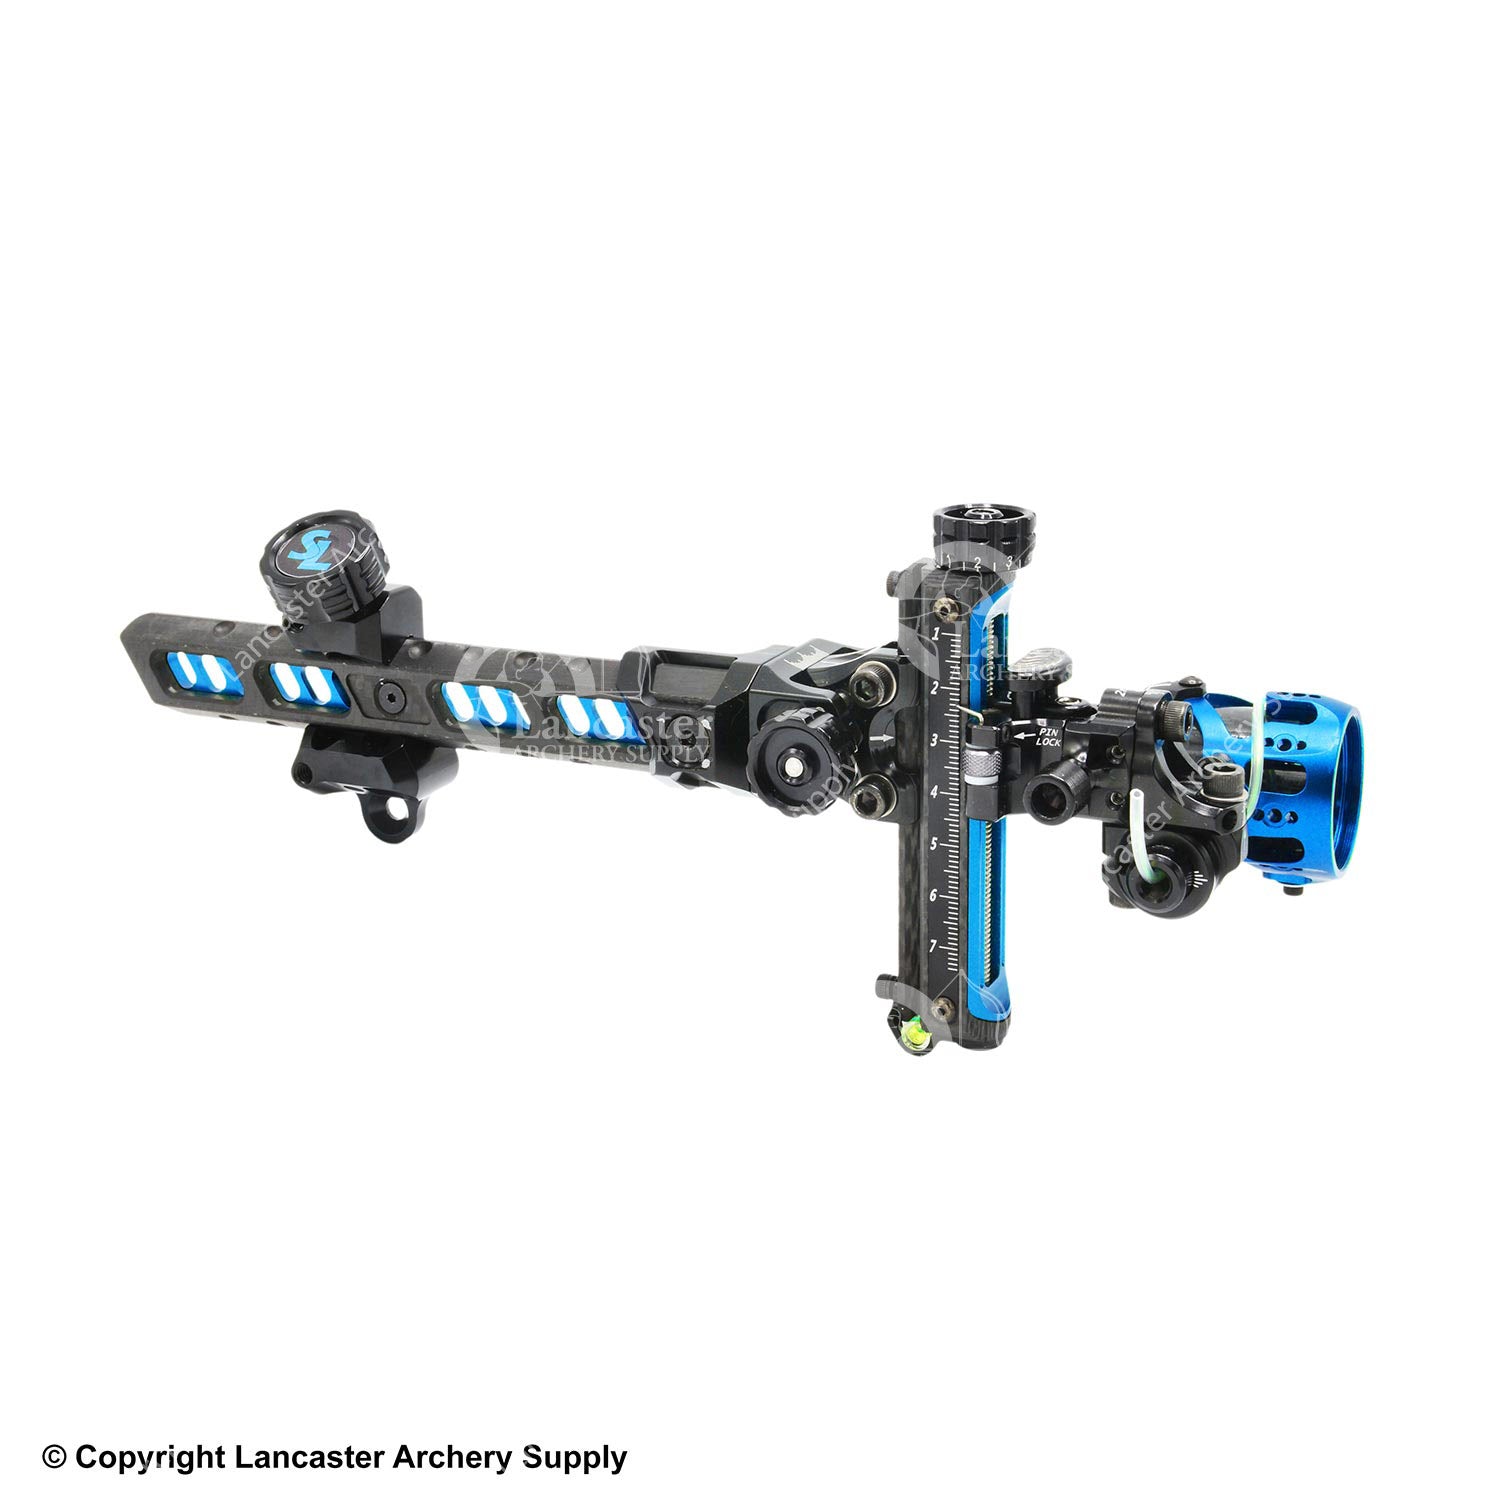 SURE-LOC Carbonic Target Sight – Lancaster Archery Supply